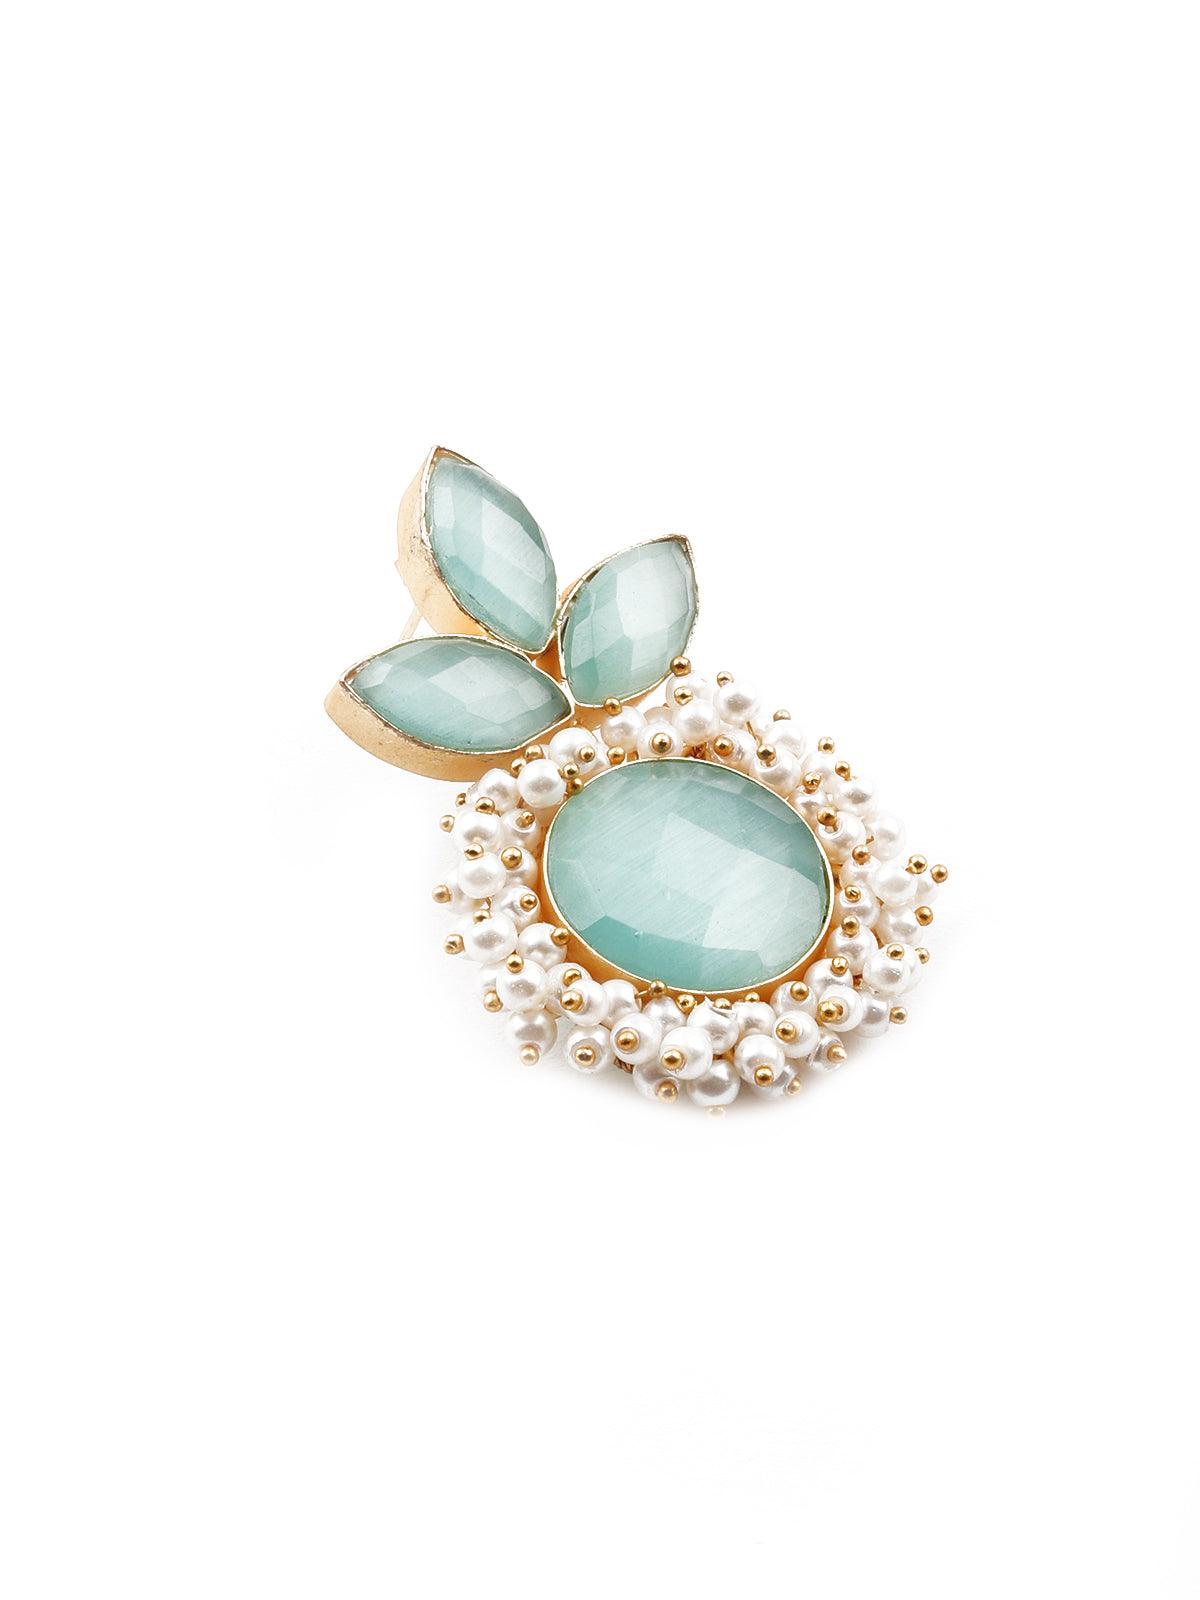 Floral stunning light blue statement earrings - Odette